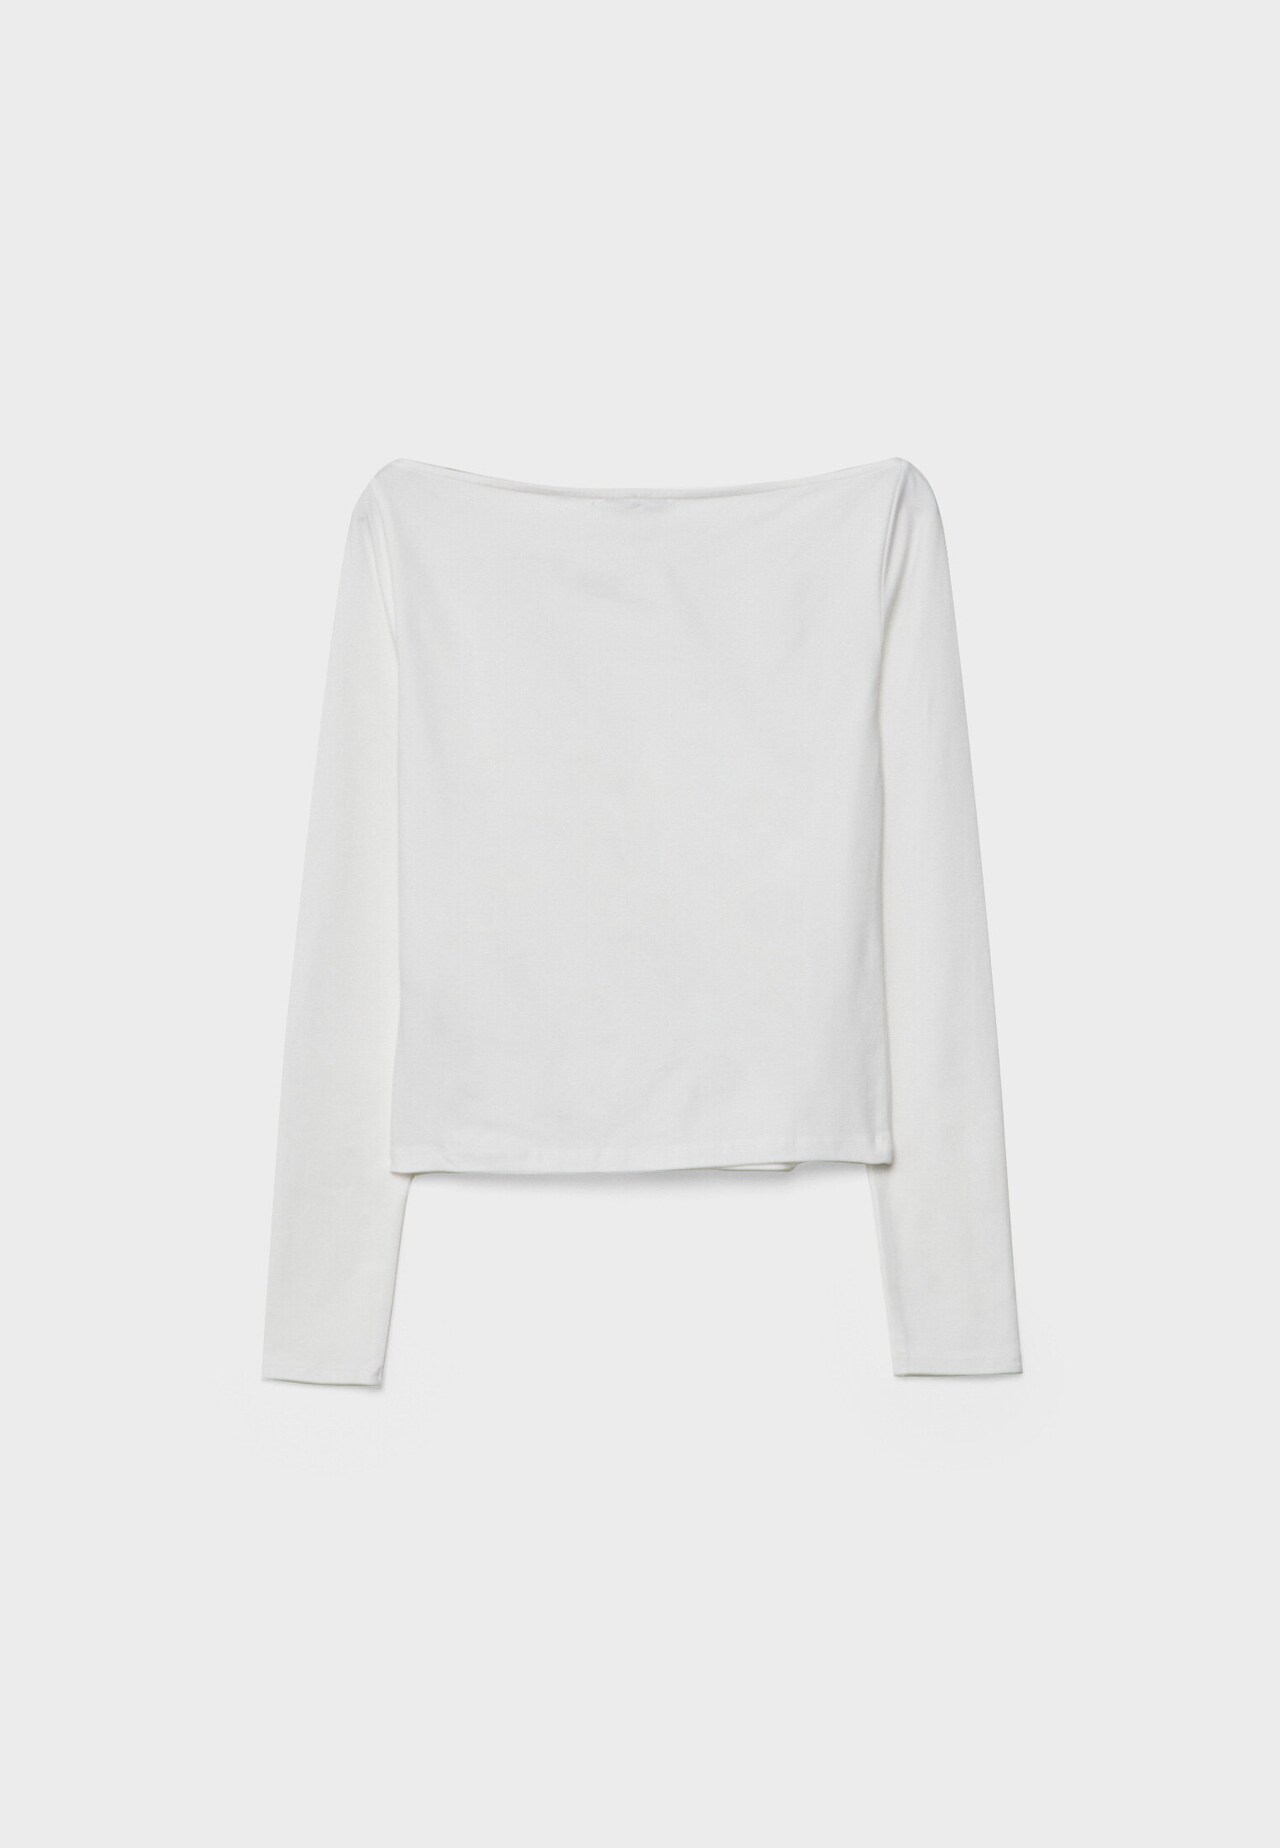 Elegance Women's White Collar Crop Top Long Sleeve